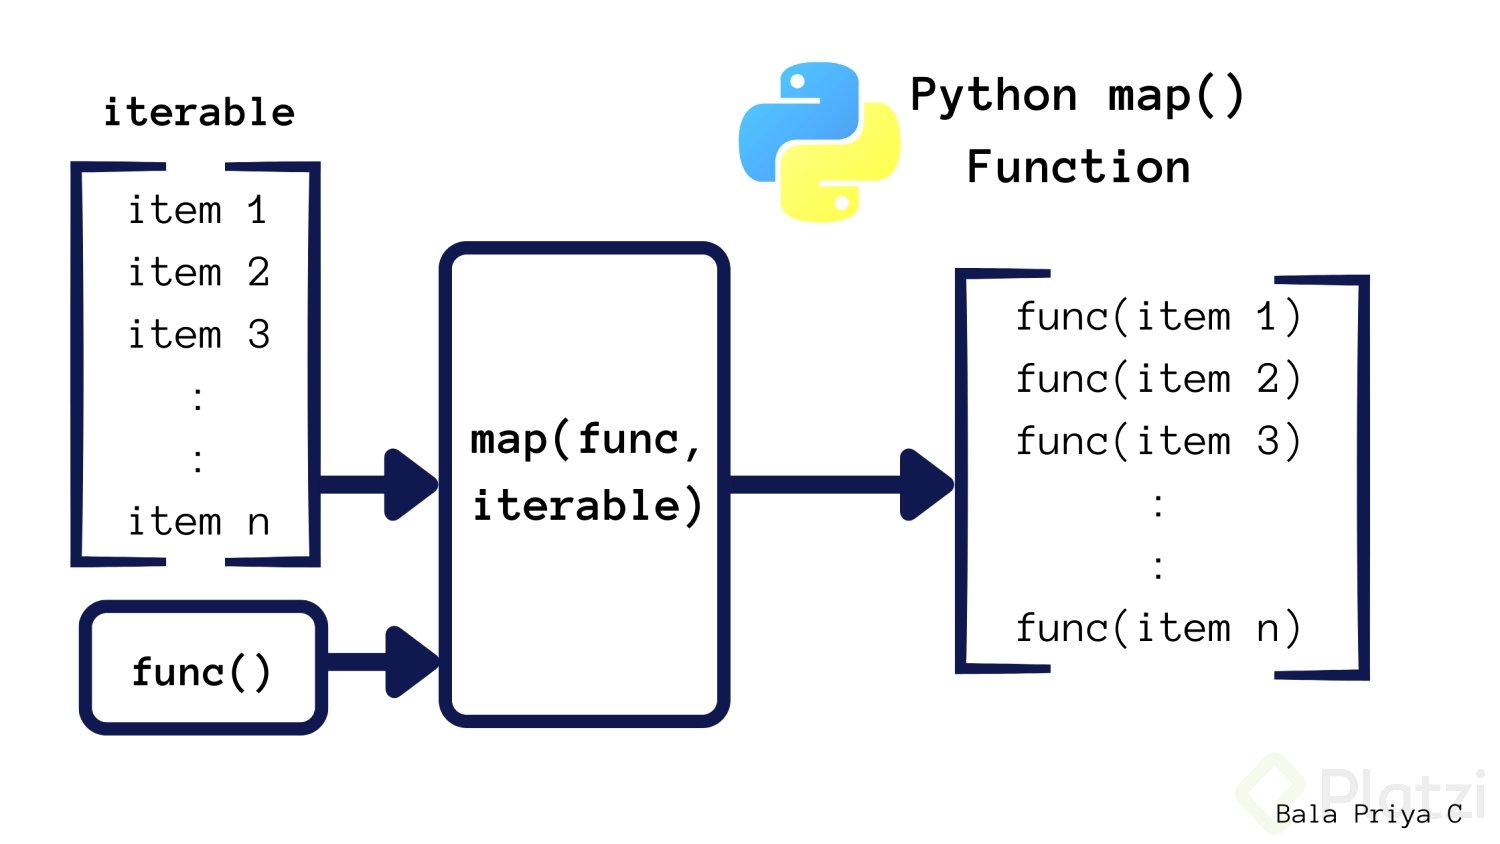 python-map-function-2-1500x84.jpg